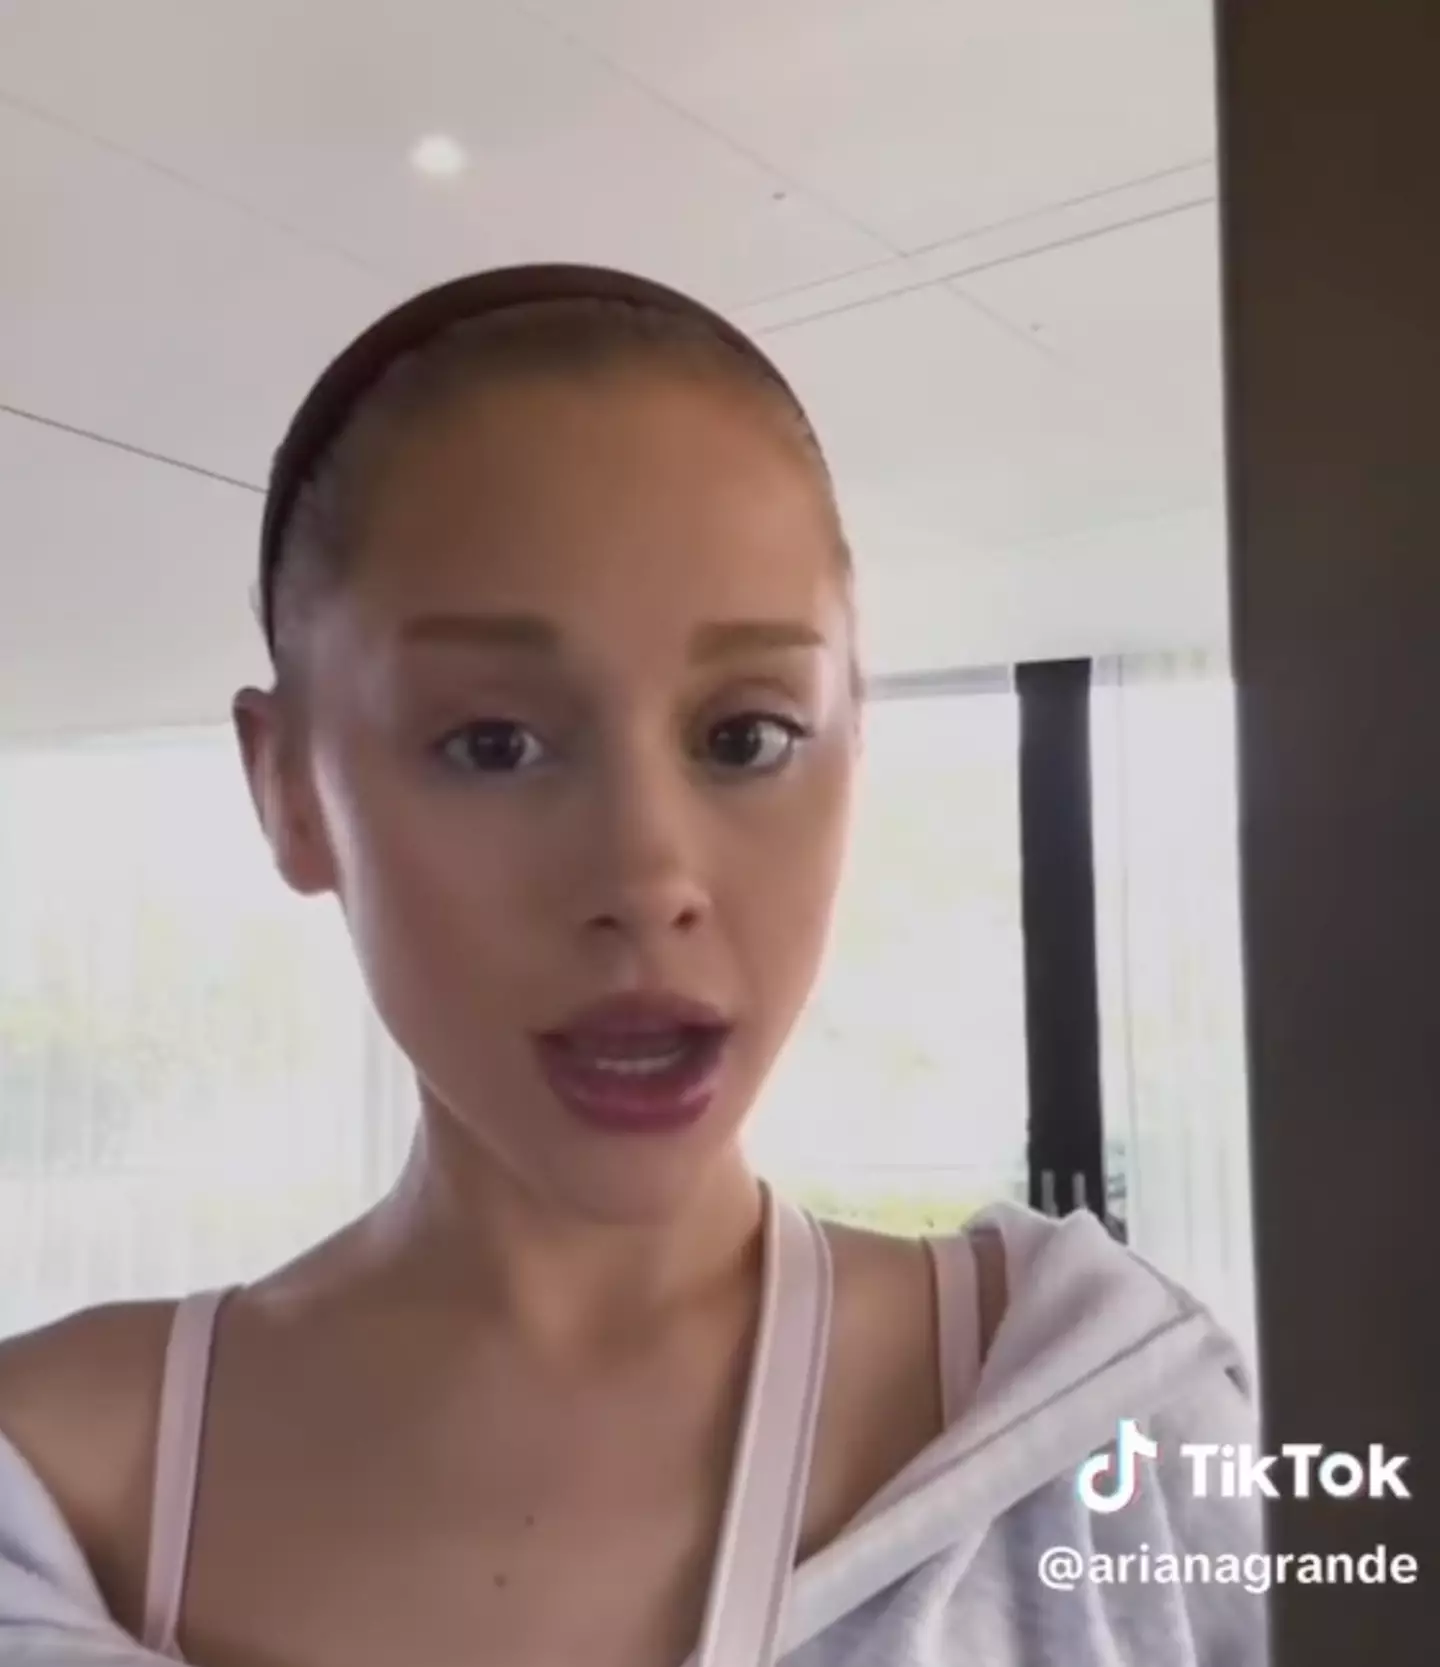 Ariana Grande shared a heartfelt message on TikTok addressing fans' concern.